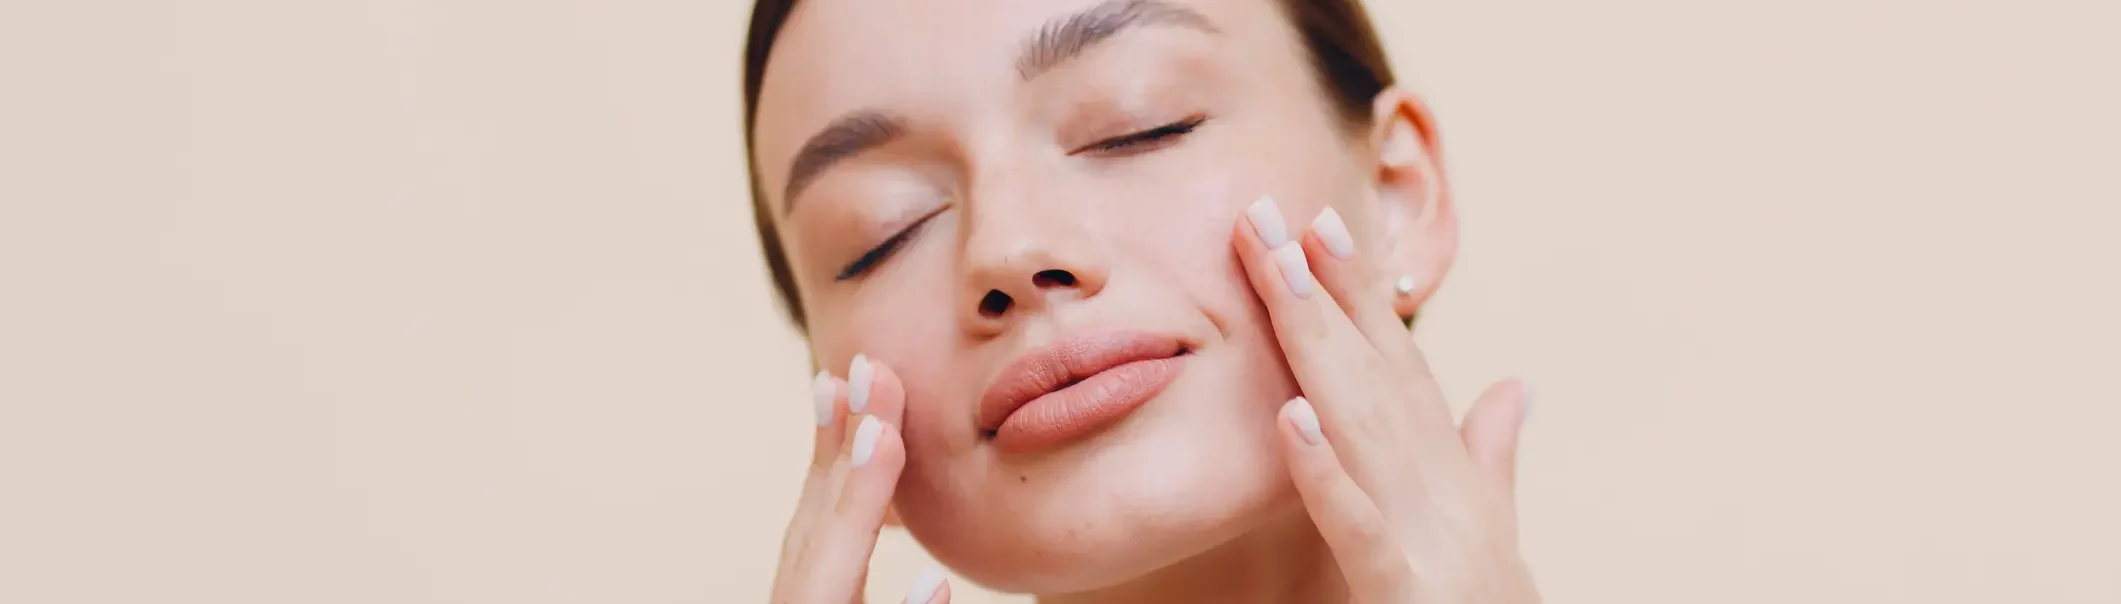 Botox no pescoço: como funciona e quais os benefícios - Royal Face